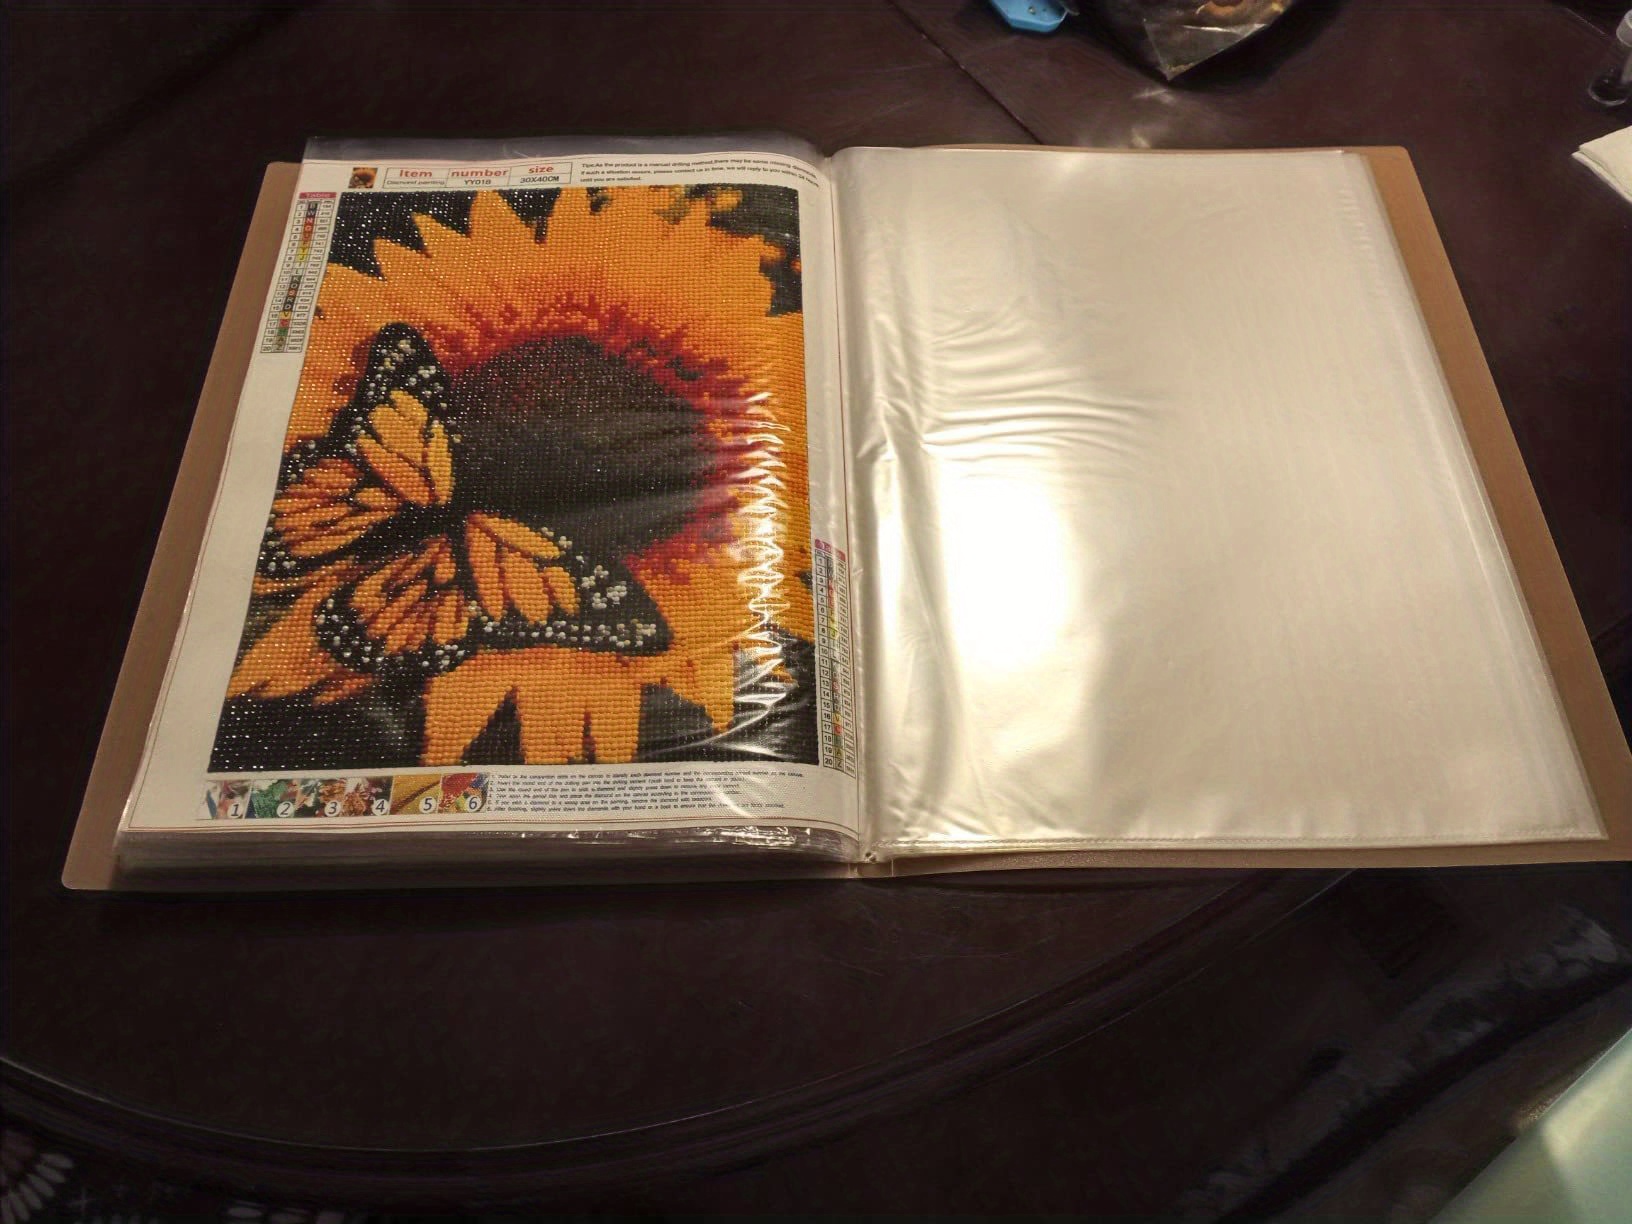 A3 Artificial Diamond Painting Storage Book Kits Artificial - Temu